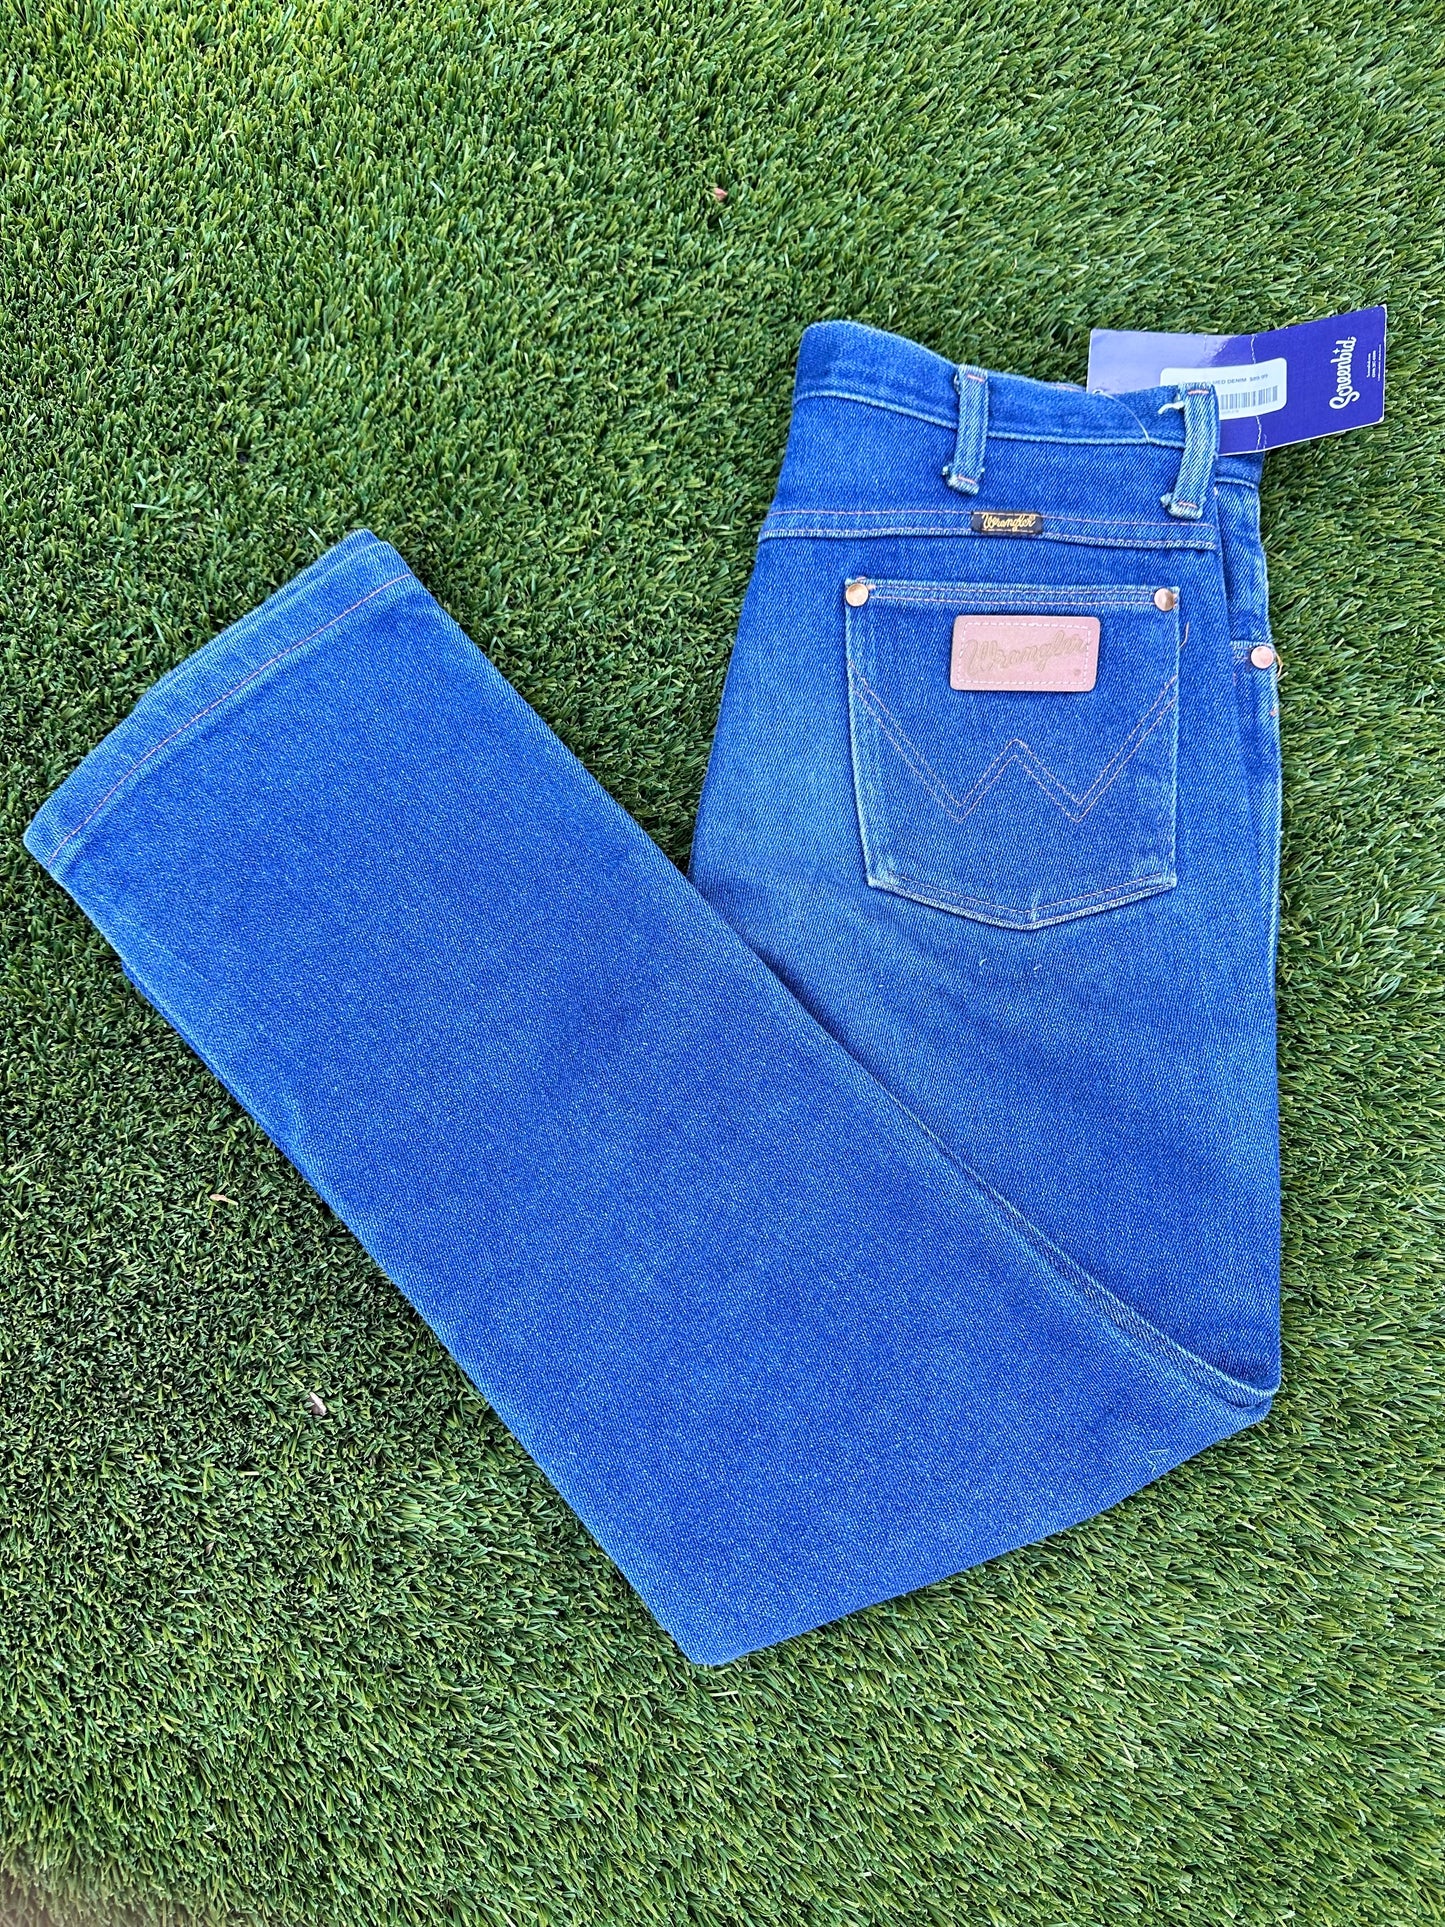 THE GET DOWN: Shaolin’s Wrangler Vintage Blue Denim Jeans (32/34)